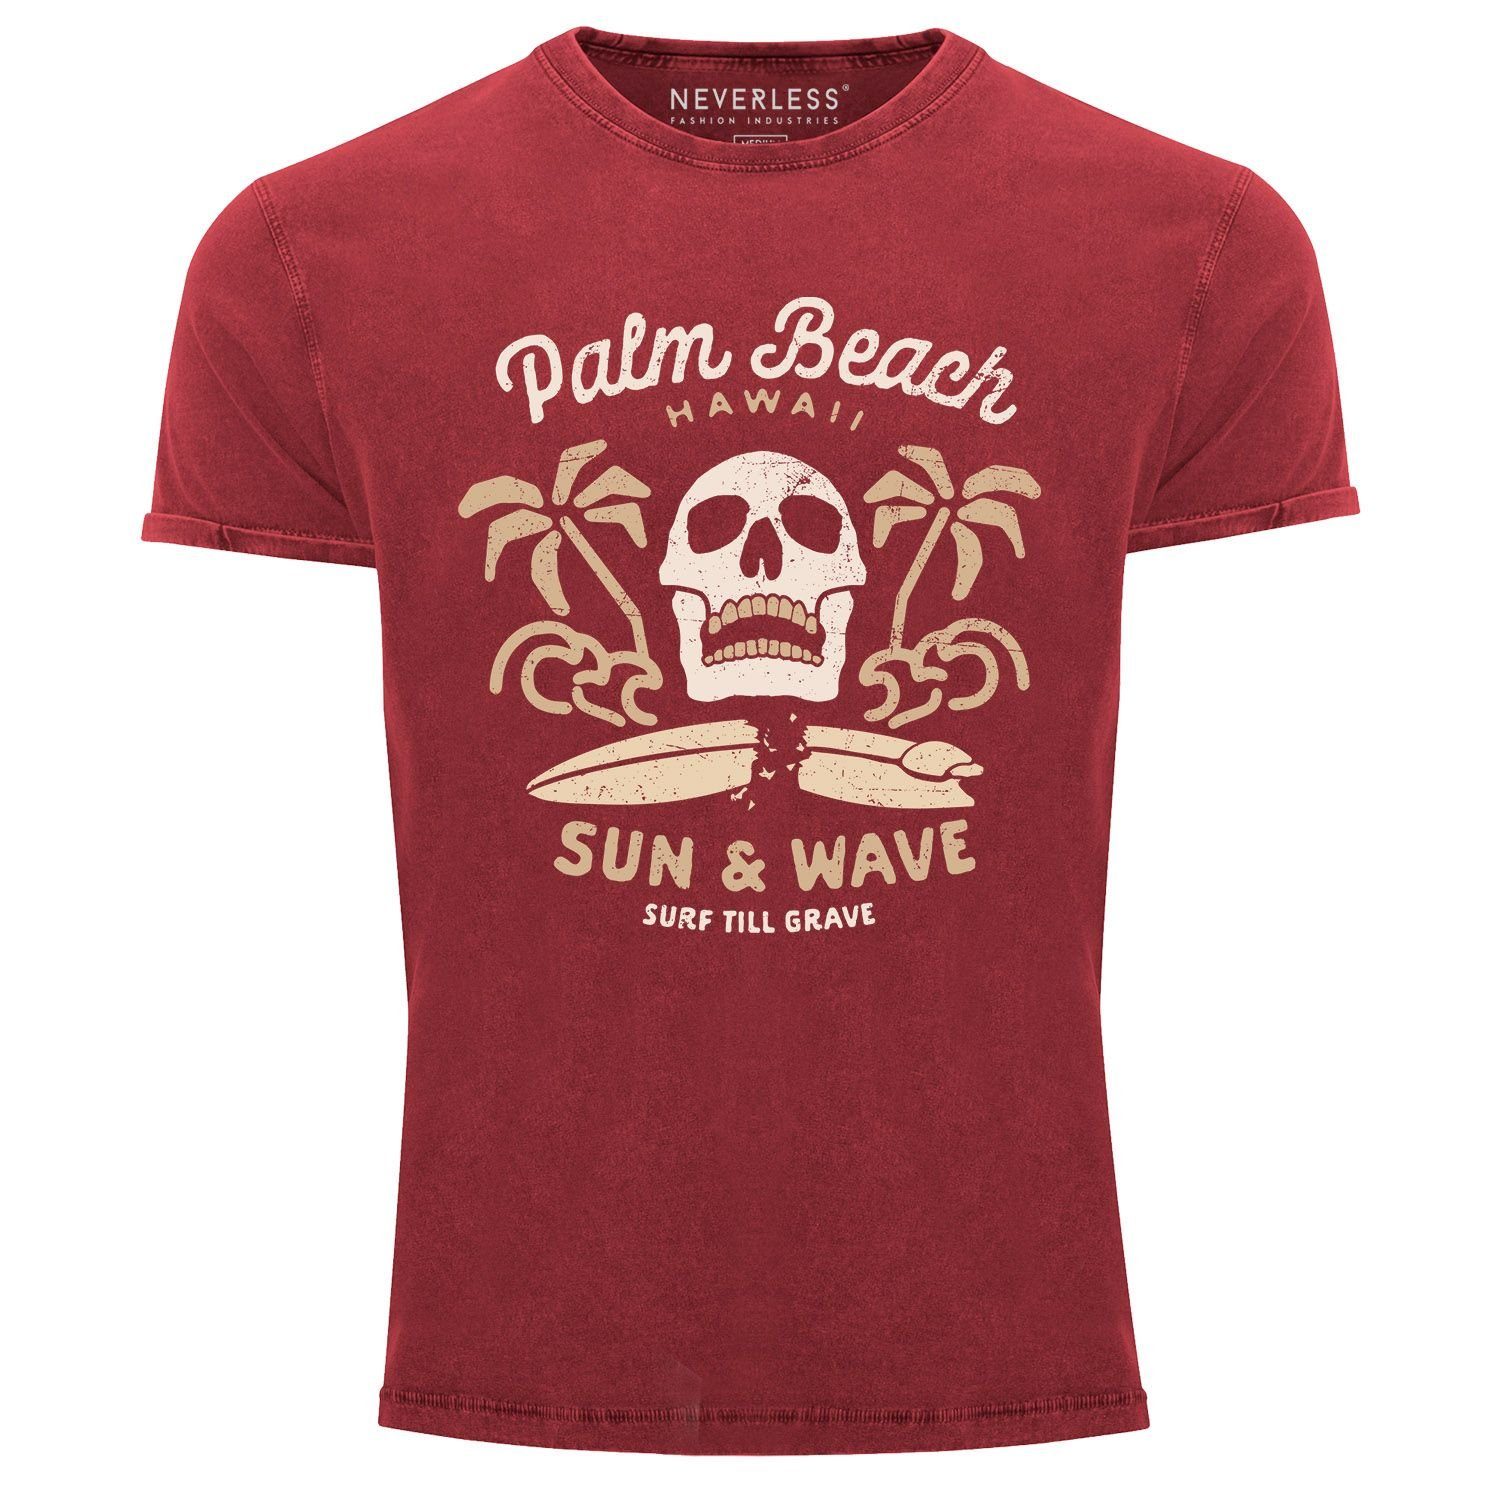 Neverless Print-Shirt Neverless® Herren T-Shirt Surf-Motiv Totenkopf Palm Beach Vintage Shirt mit Print rot